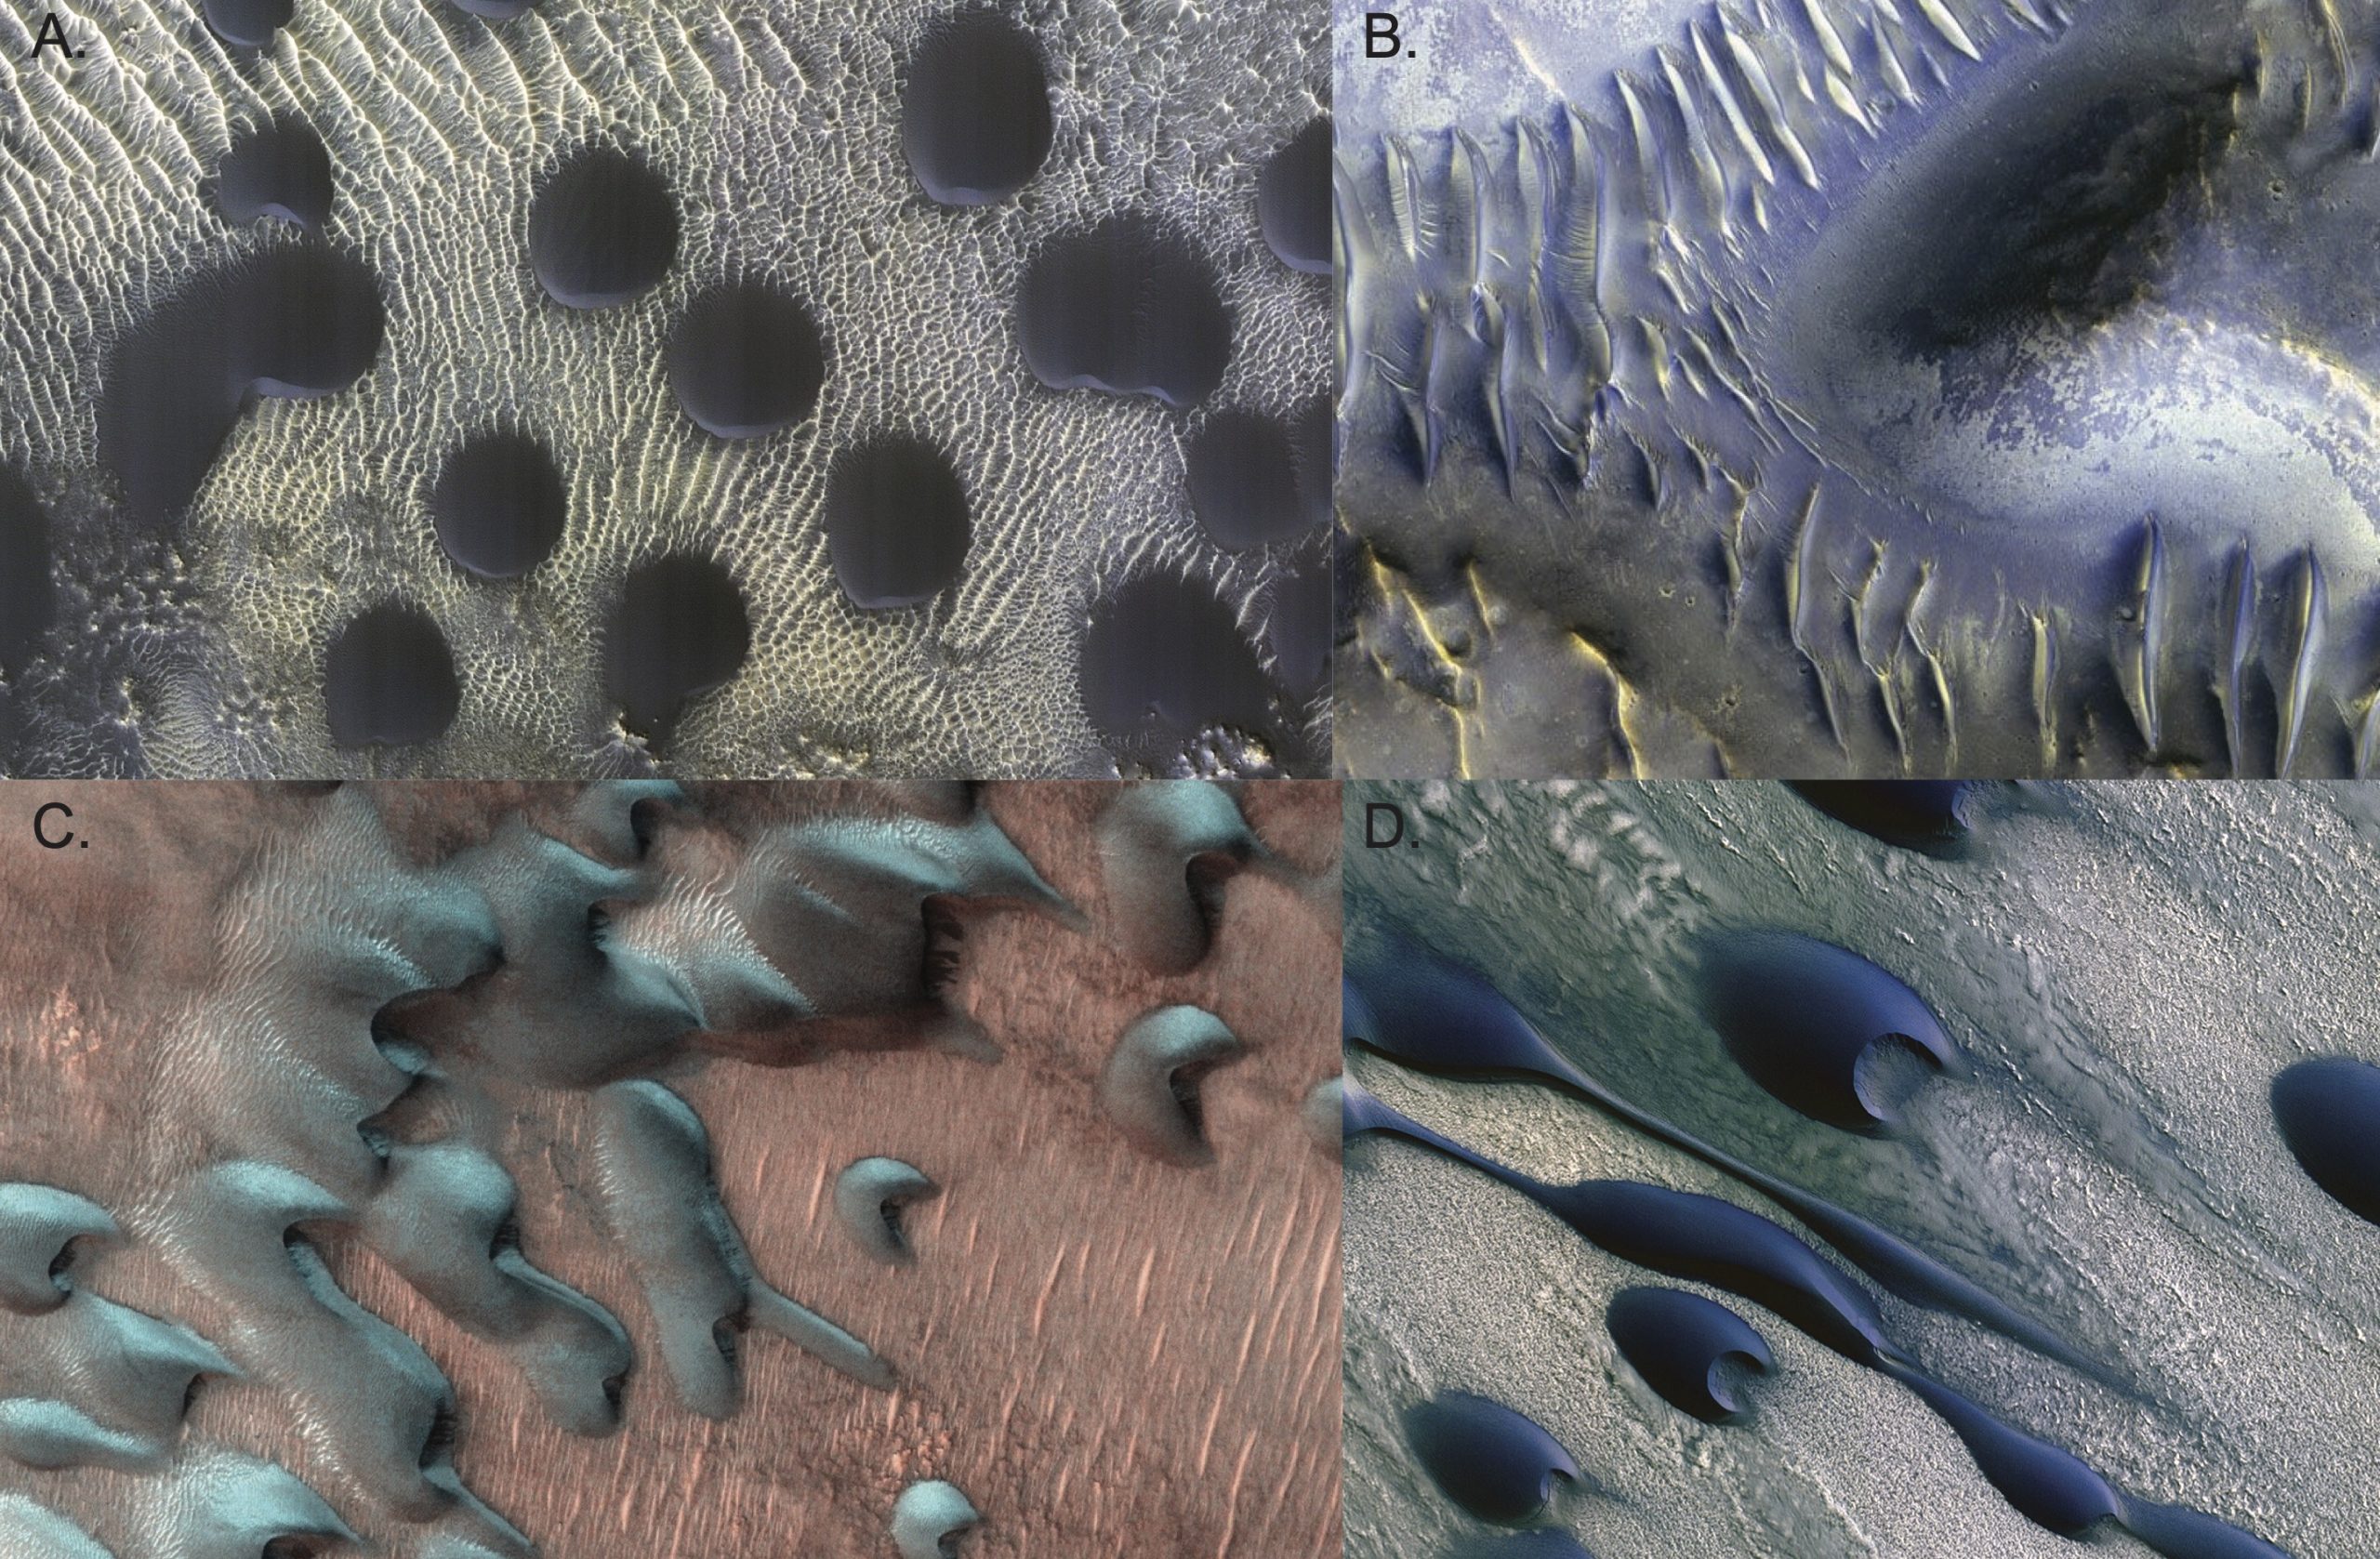 Four images of Martian dunes